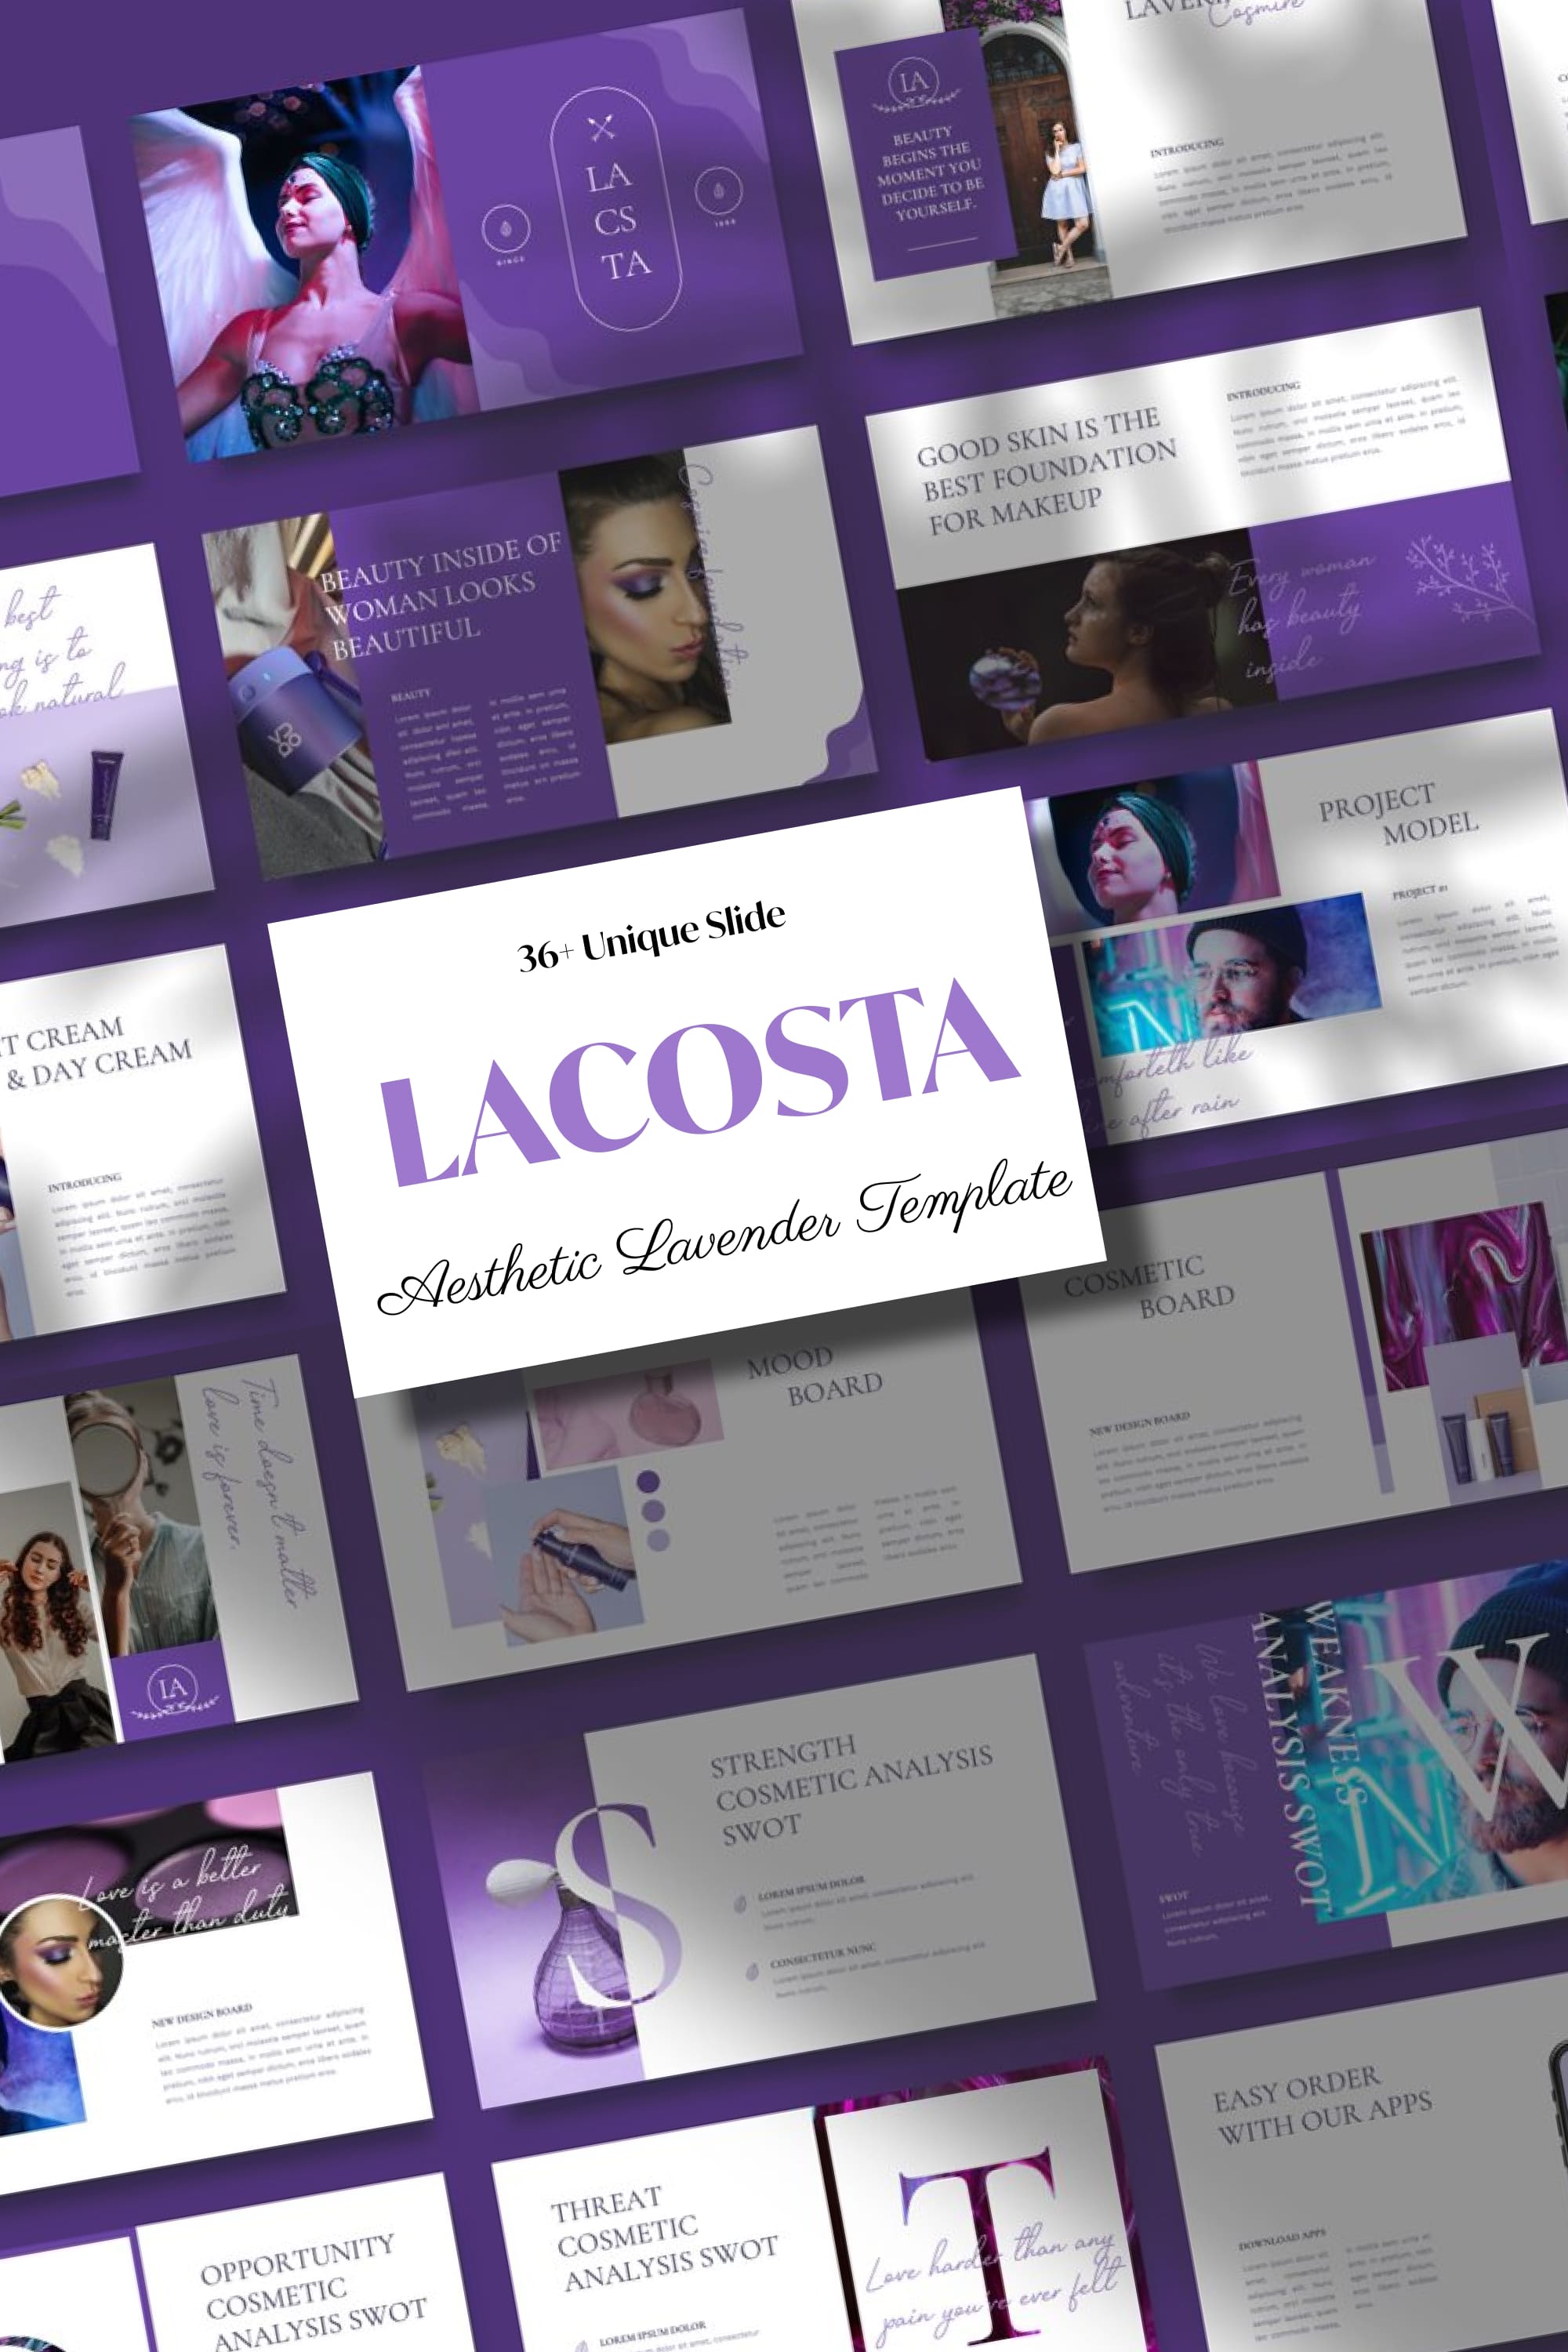 lacosta aesthetic lavender template pinterest